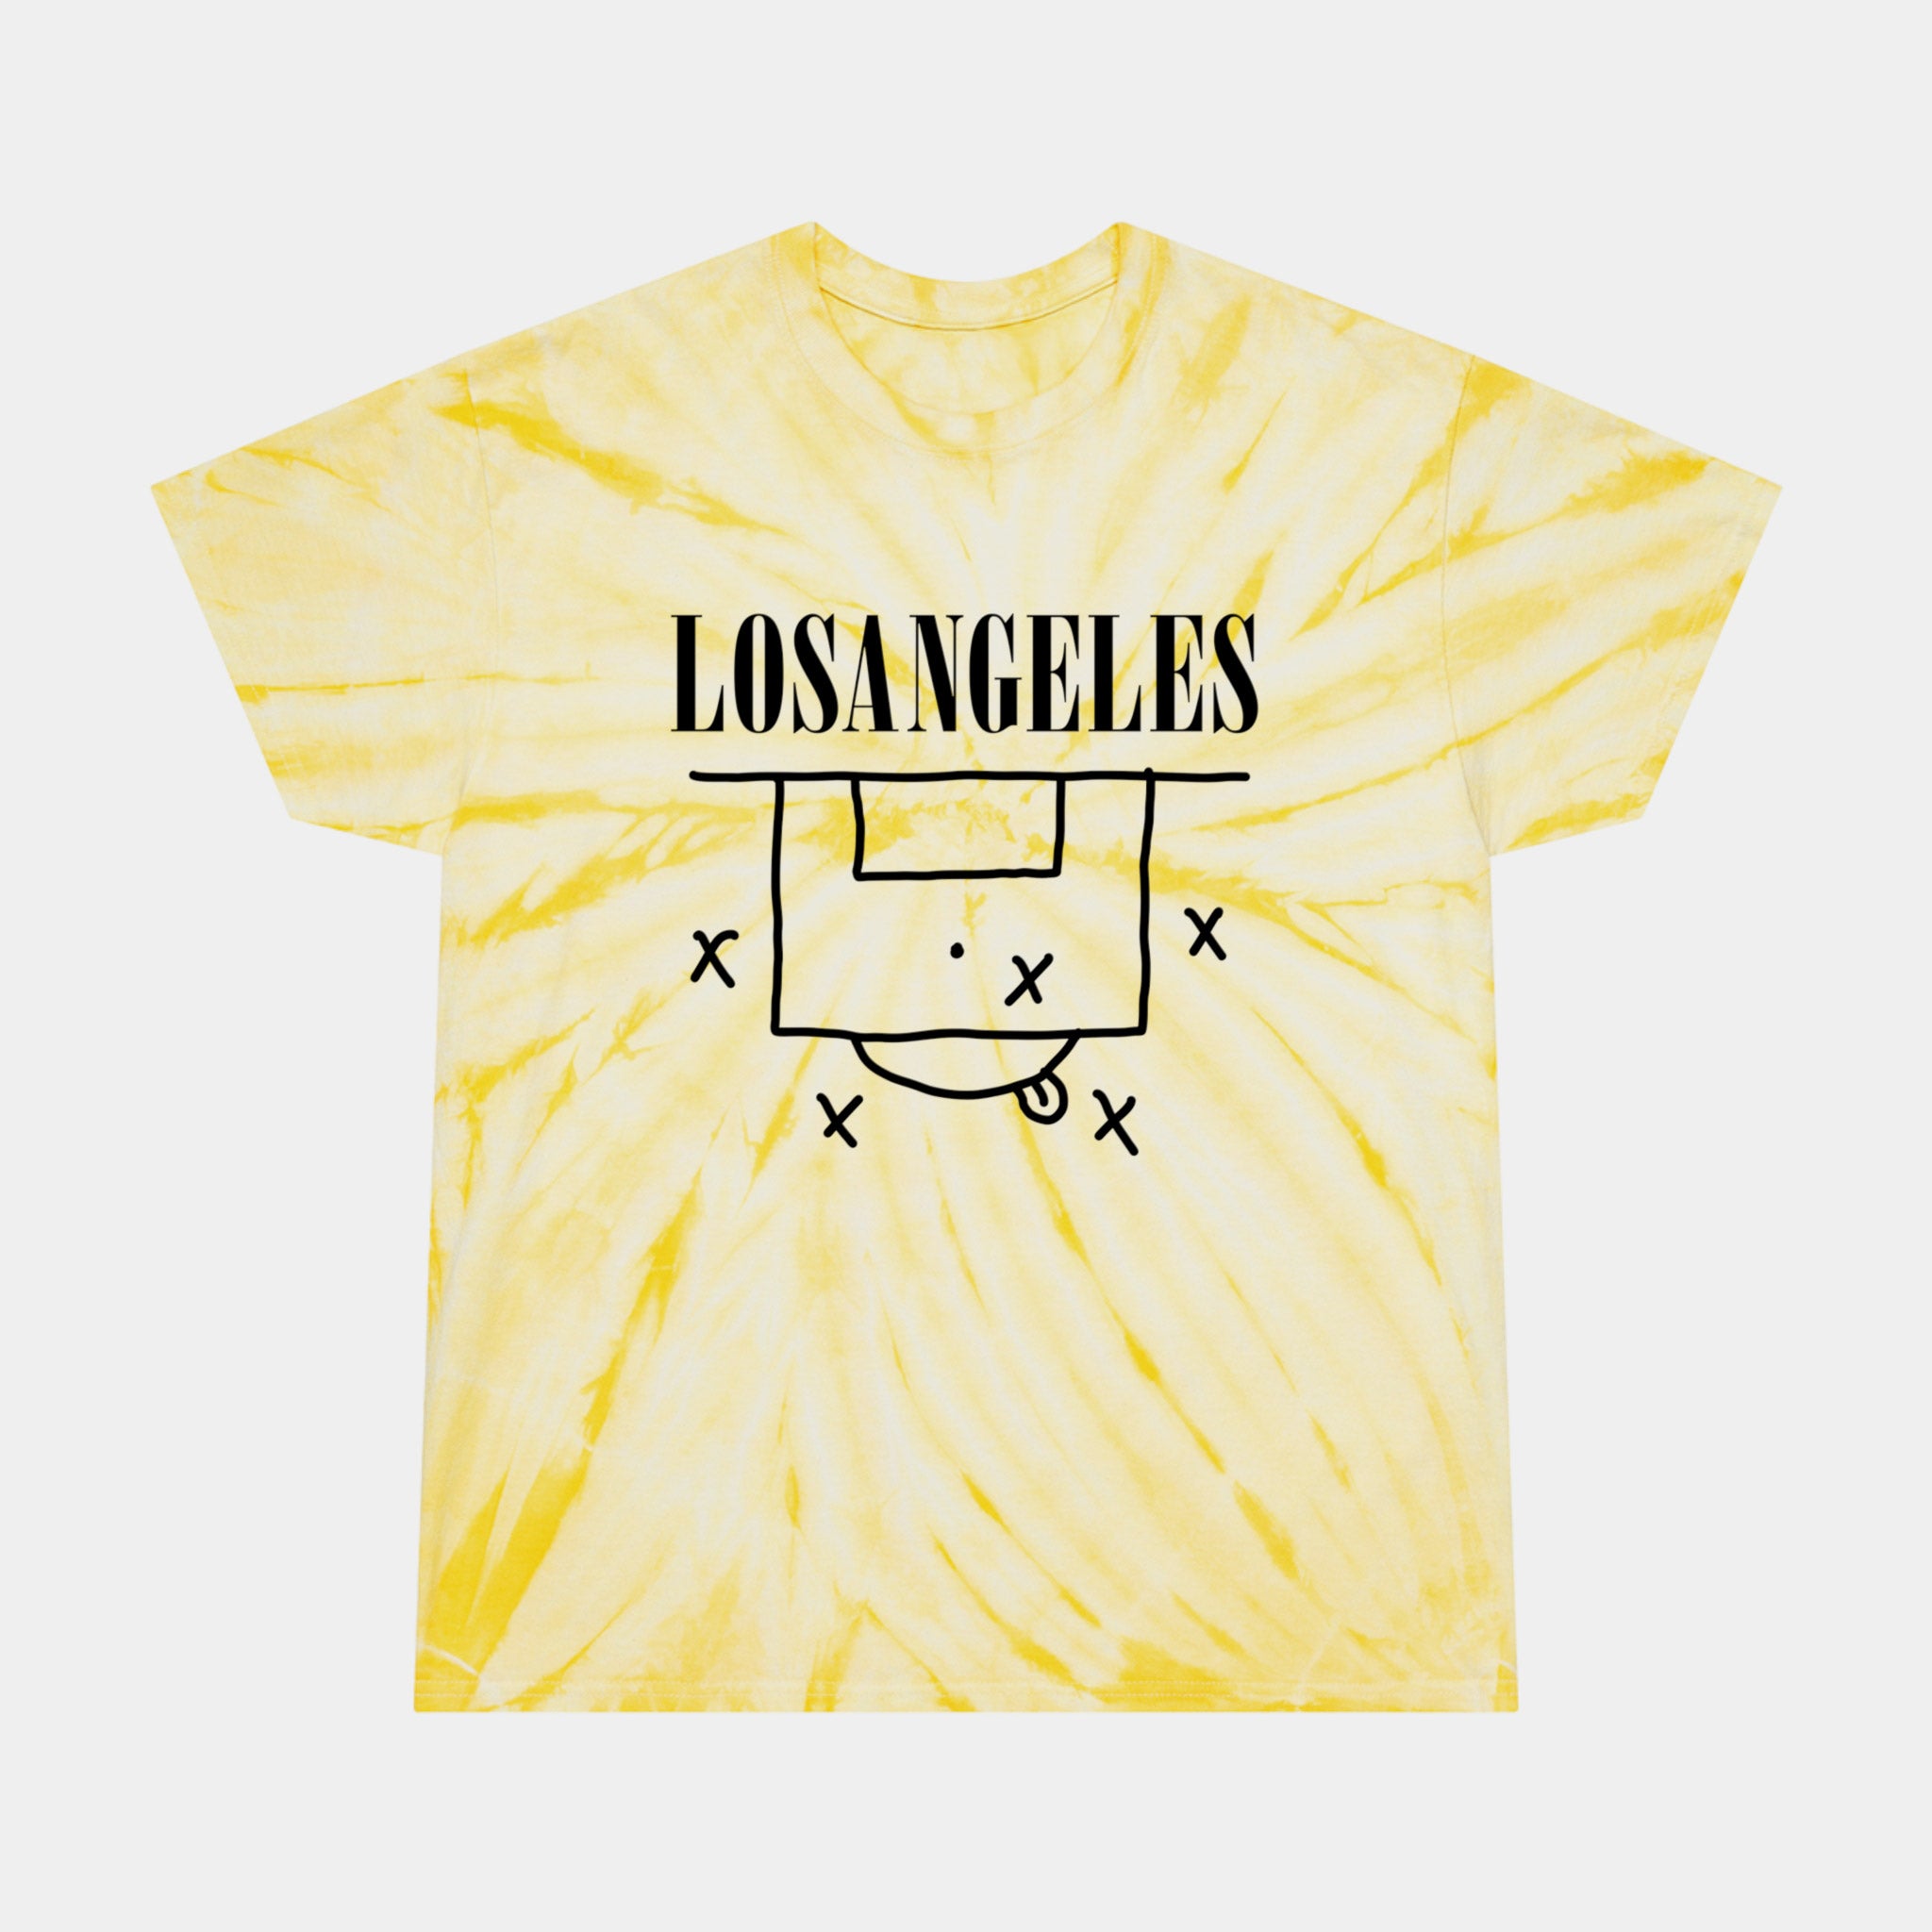 Smells Like Team Spirit, Far Out Edition (LAFC) T-shirt